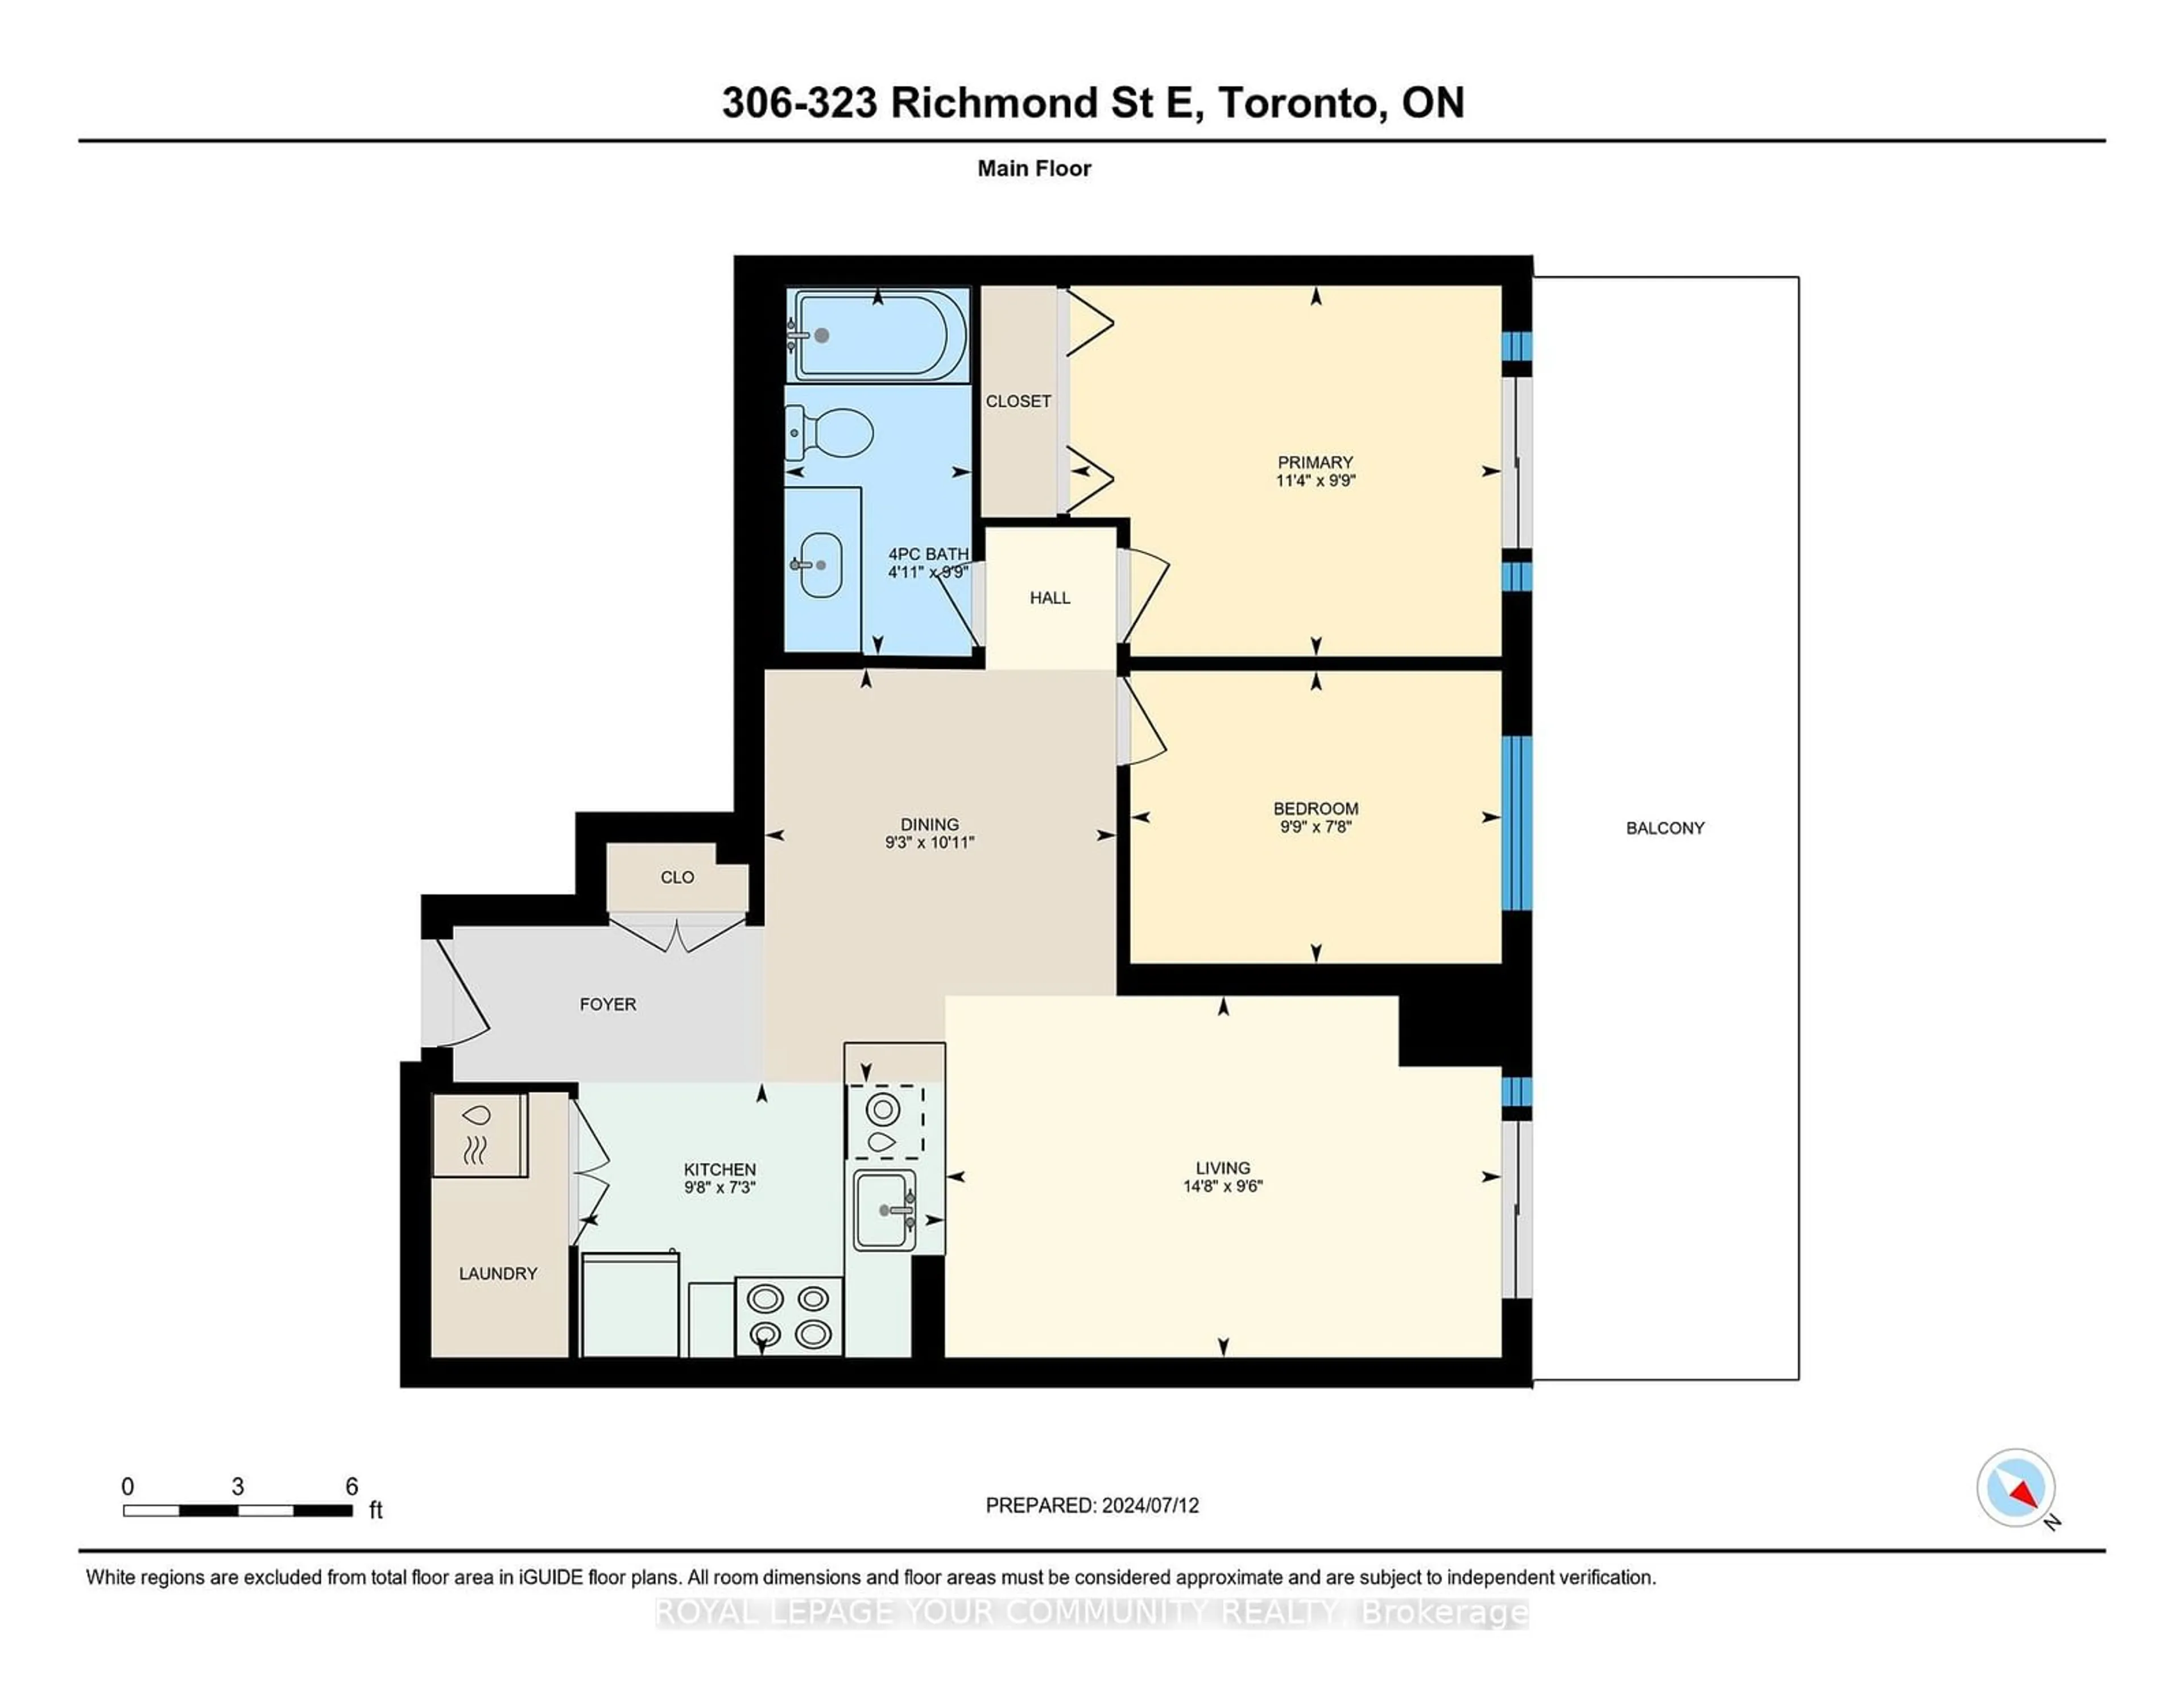 Floor plan for 323 Richmond St #306, Toronto Ontario M5A 3R4